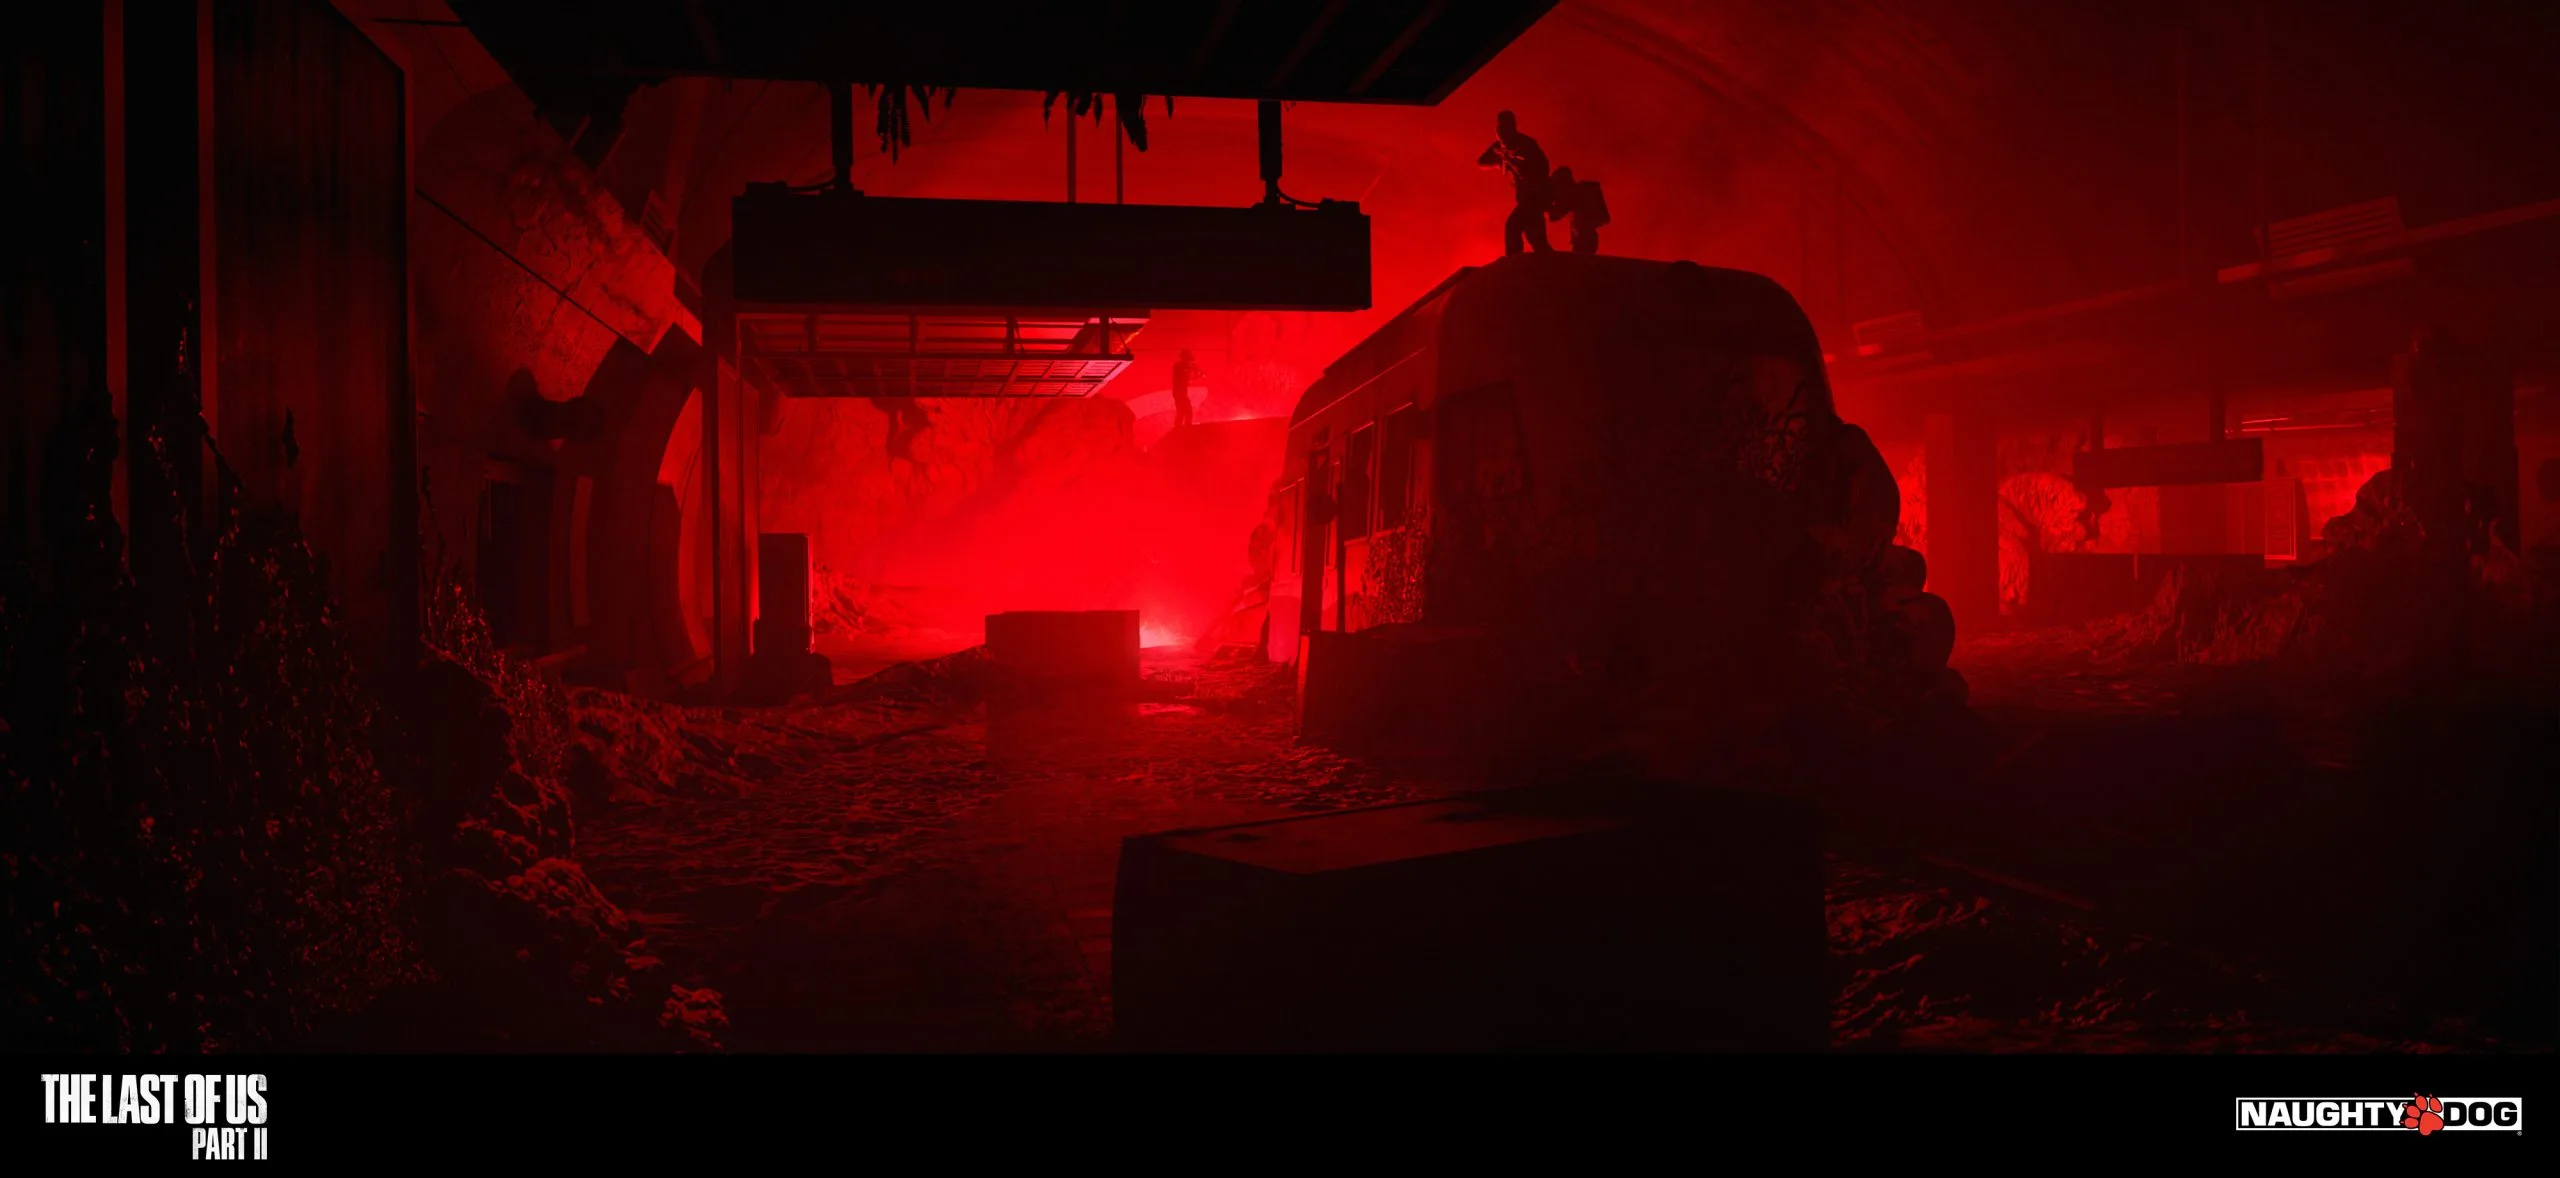 Sebastian Gromann – Concept Artist – The Last of Us Part II – One Pixel Brush

